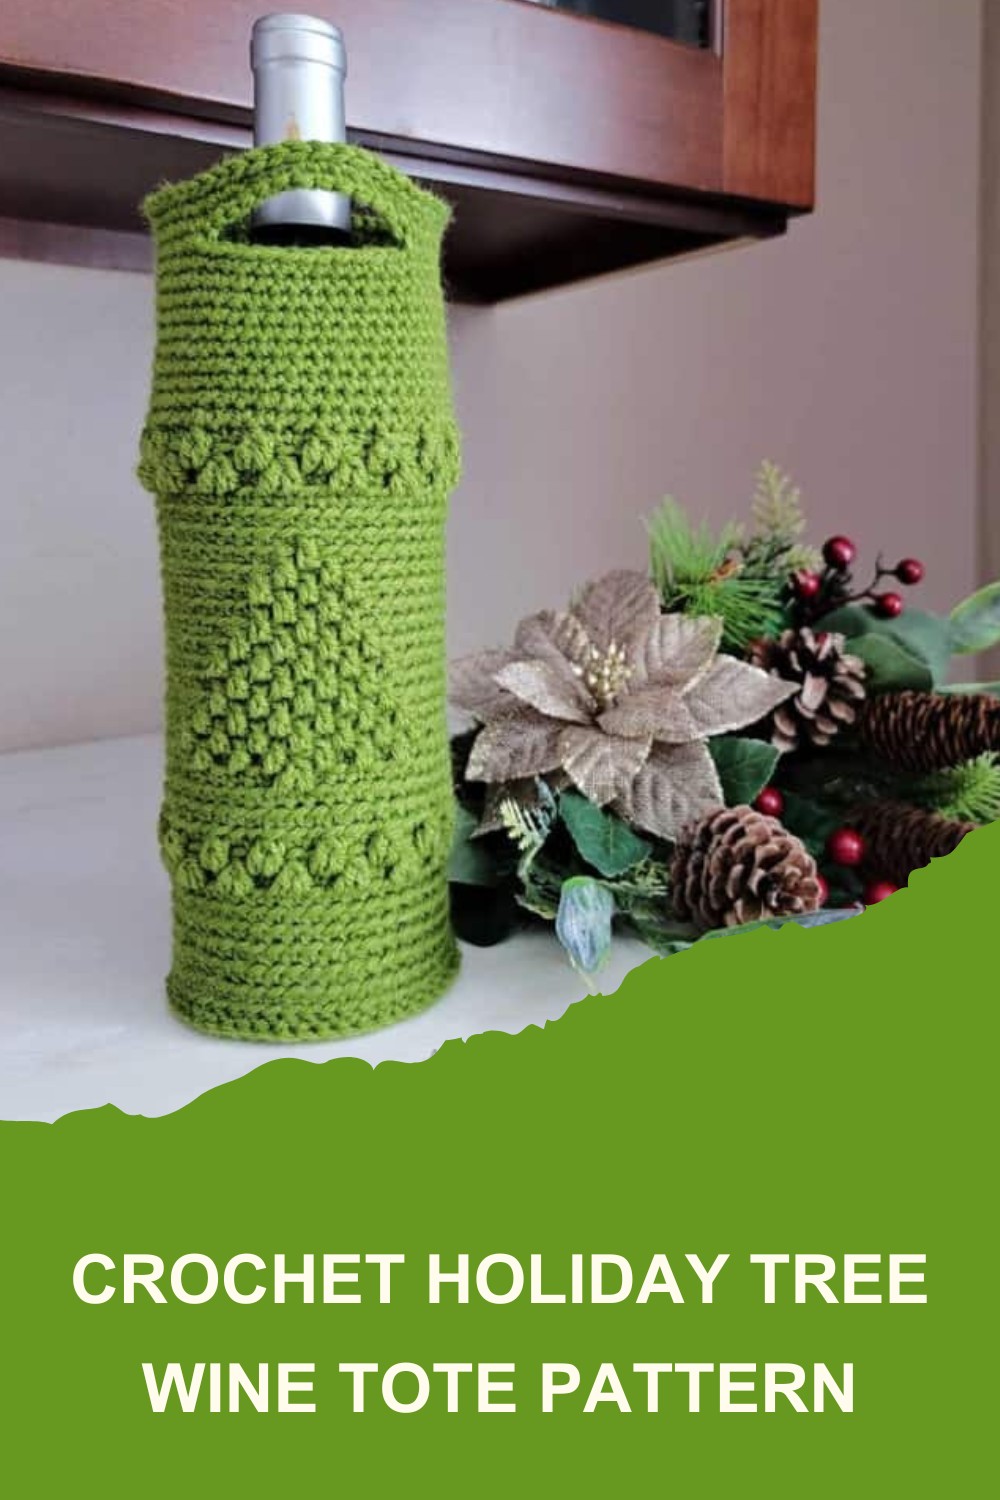 Crochet Holiday Tree Wine Tote Pattern